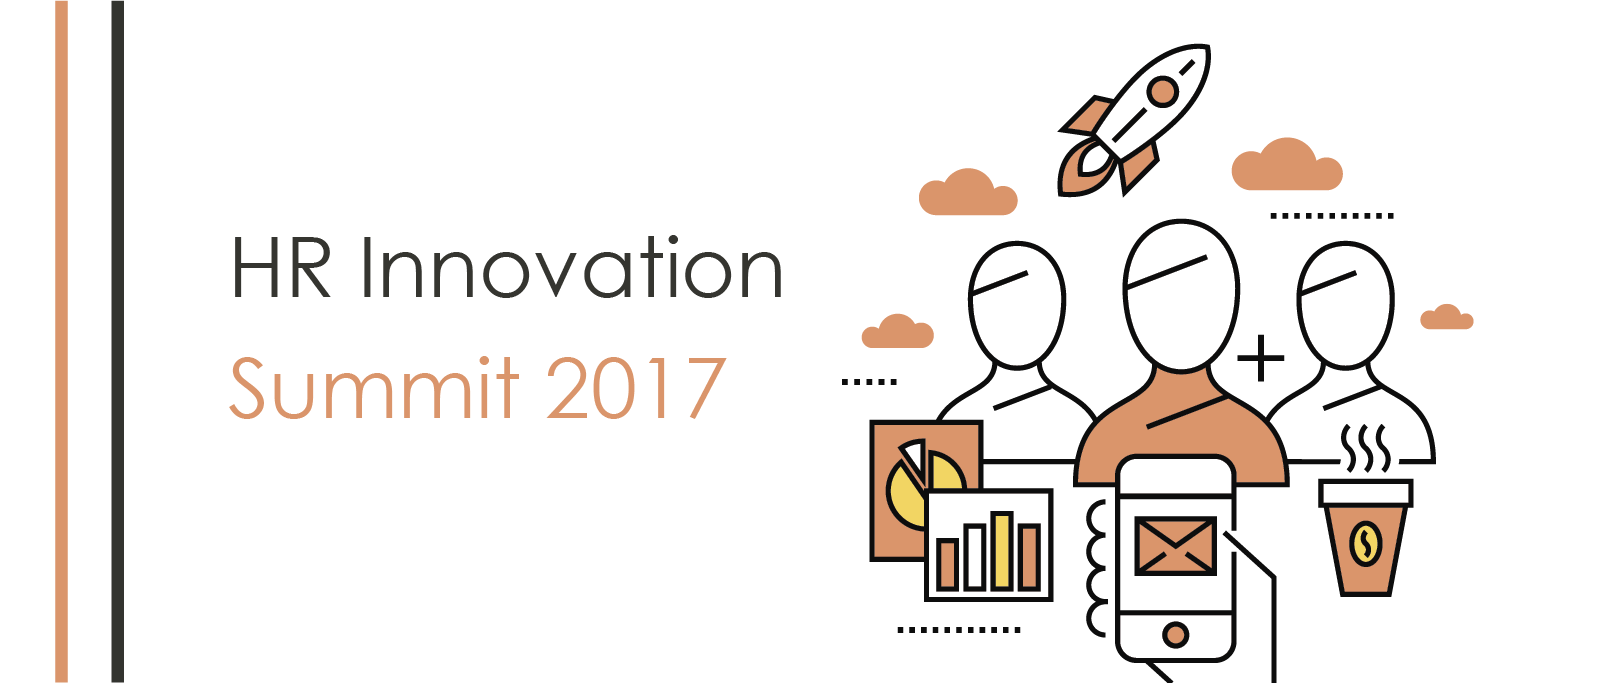 HR Innovation Summit: las personas, primero